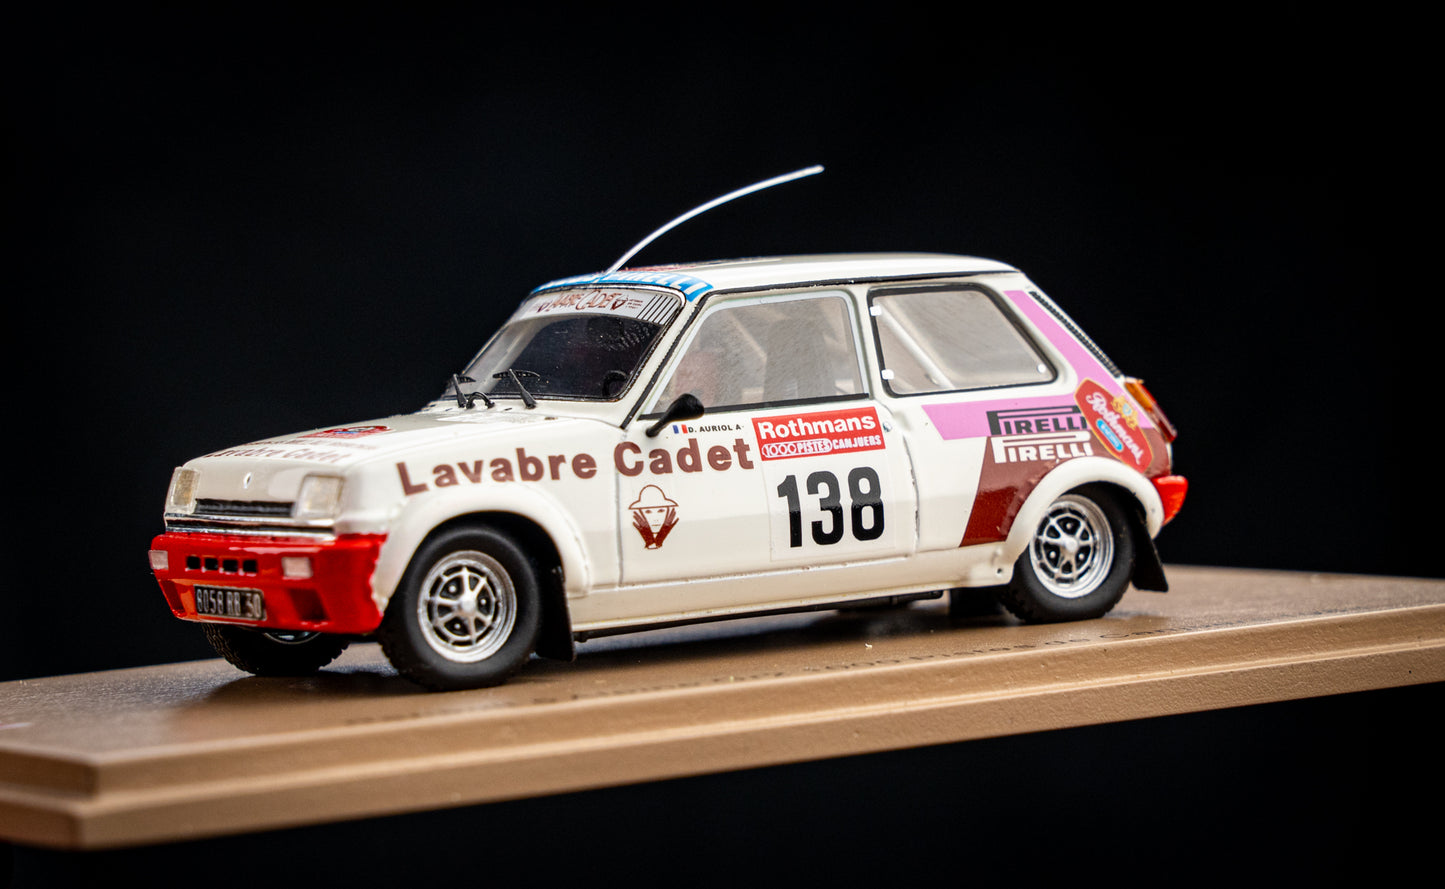 Renault 5 Alpine Gr.2 lim. 300 Stk. #138 D. Auriol / J.Y. Tussiot - Rallye 1000 Piste de Canjuers 83 Spark 1:43